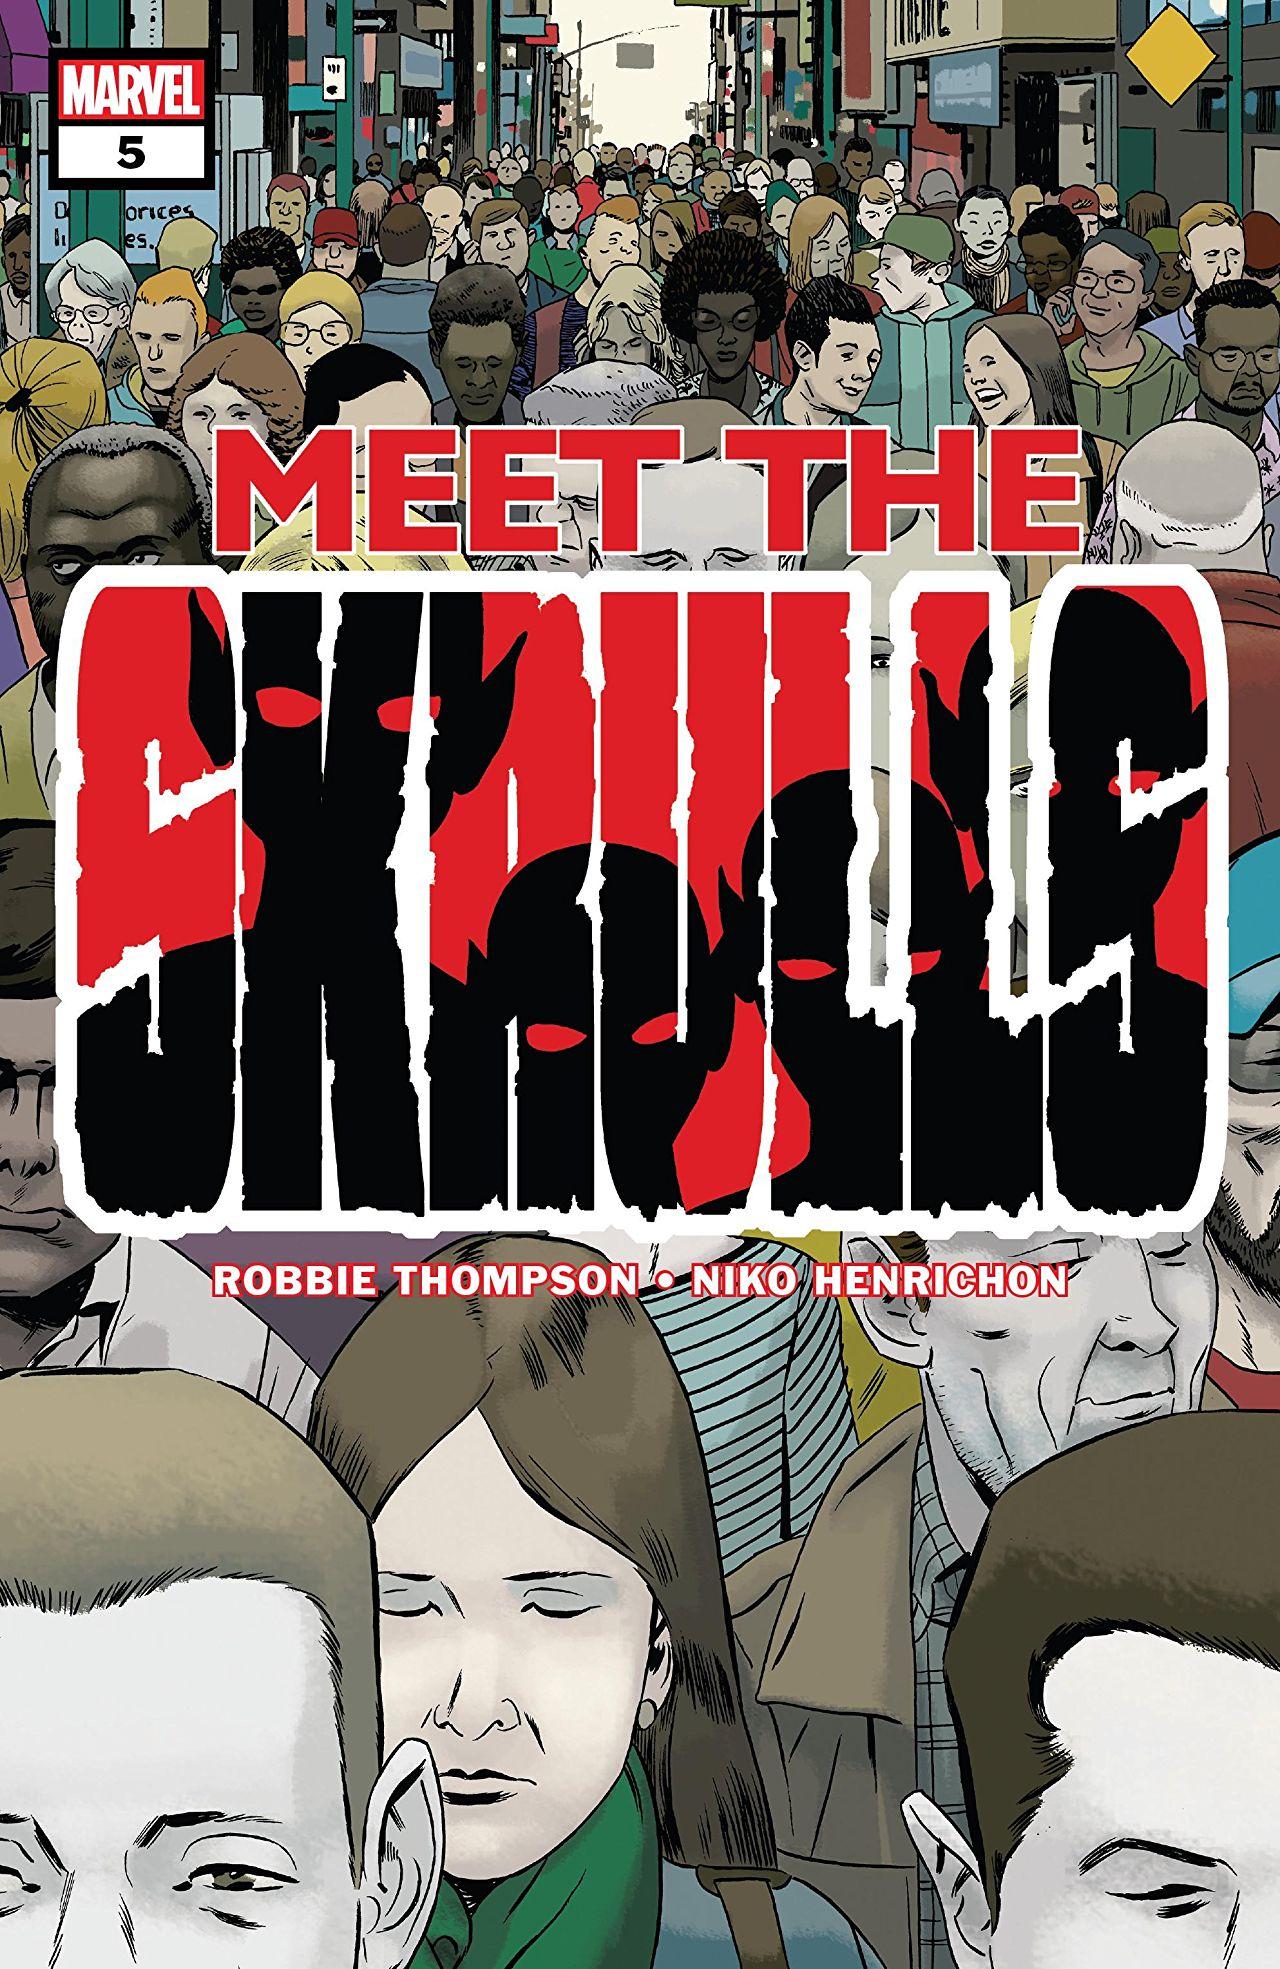 Meet the Skrulls Vol. 1 #5